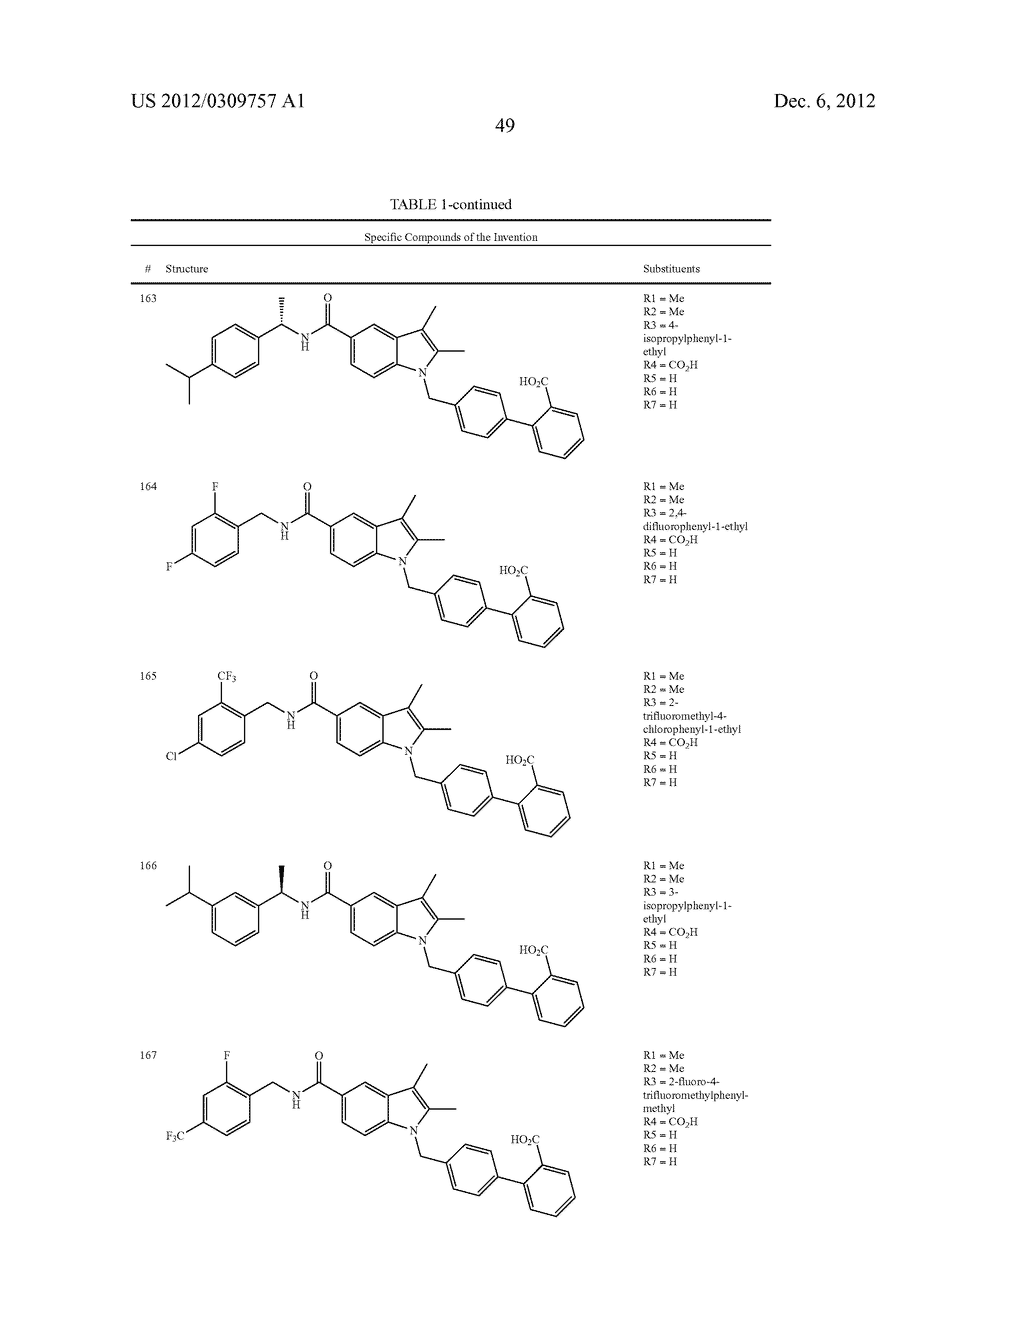 N-BIPHENYLMETHYLINDOLE MODULATORS OF PPARG - diagram, schematic, and image 64